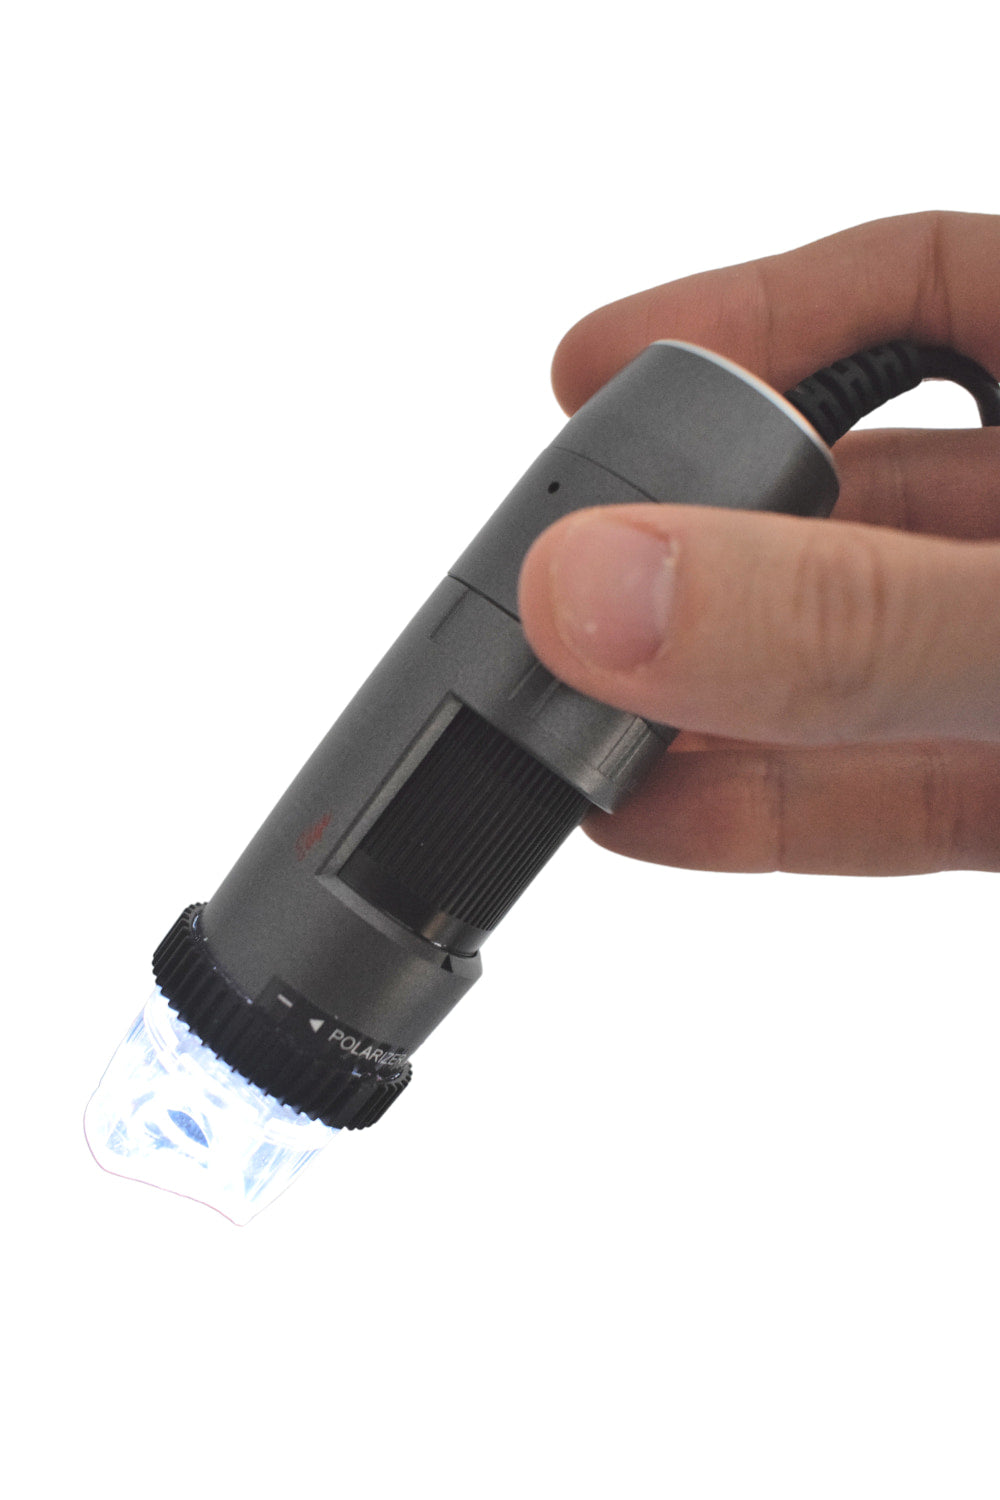 Capilaroscopio Dino-Lite CapillaryScope 200 Pro (MEDL4N Pro)